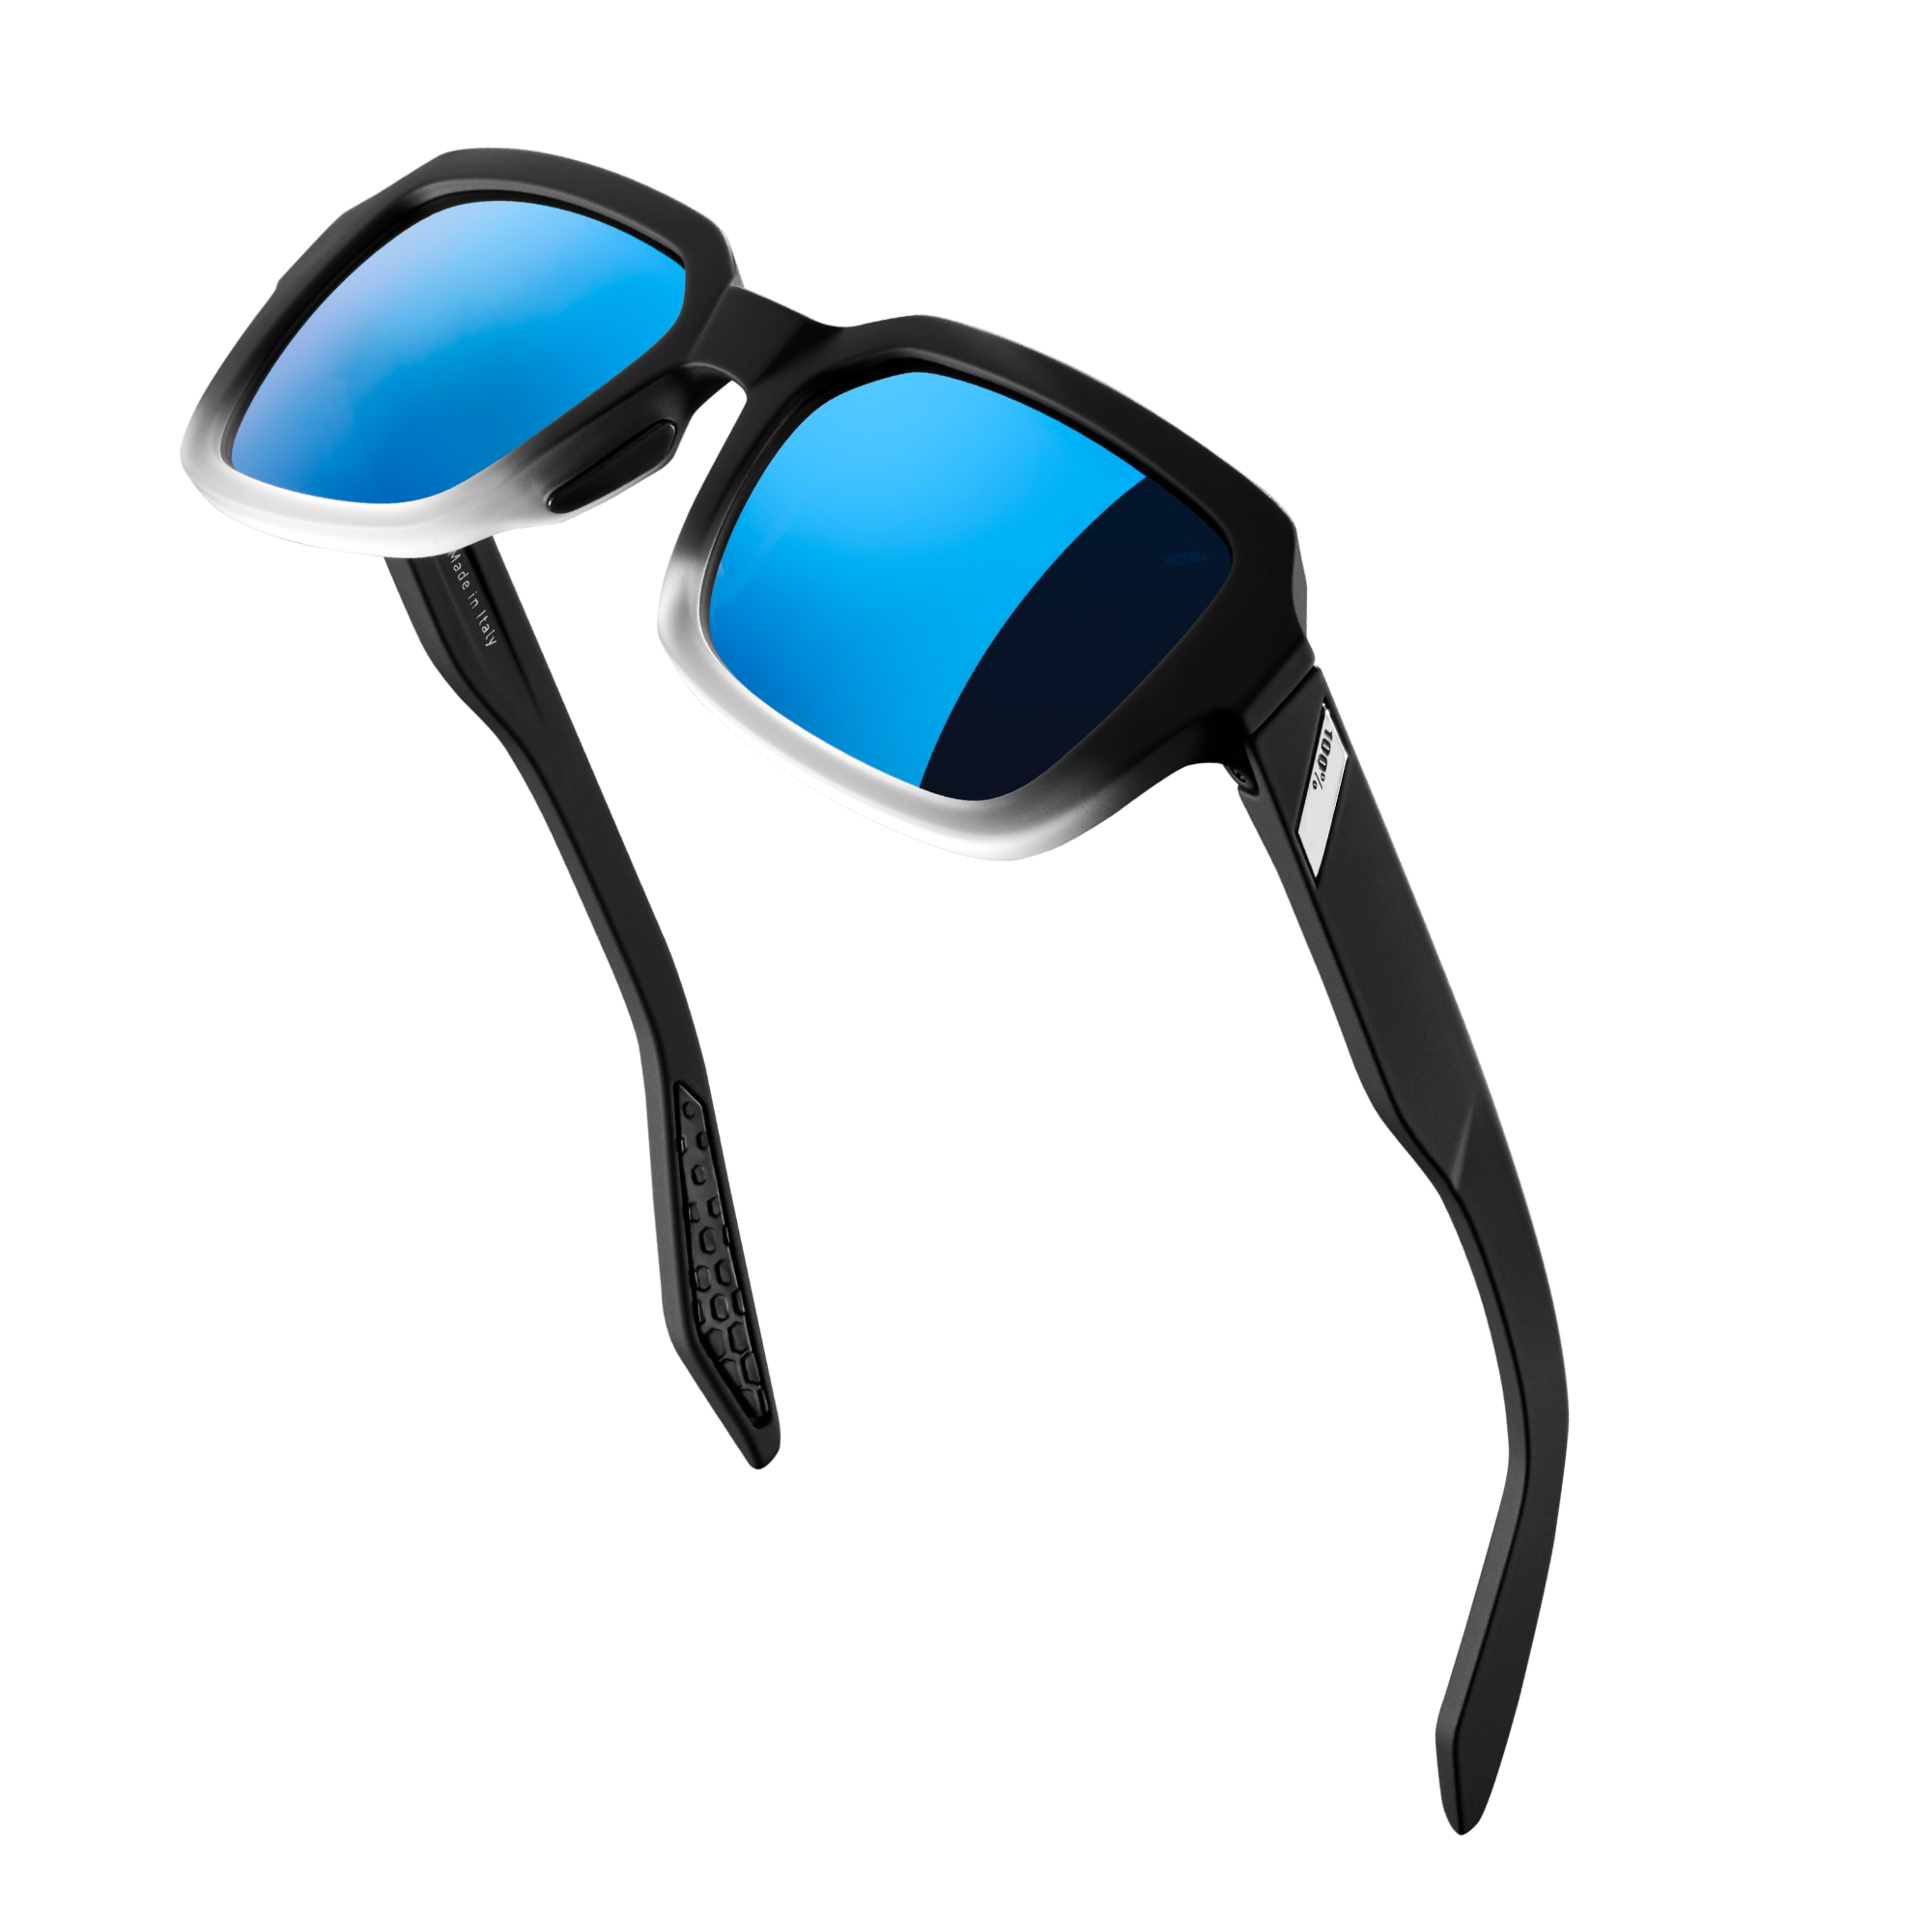 Racing Sunglasses - Racing Eyewear for Active Motorsports